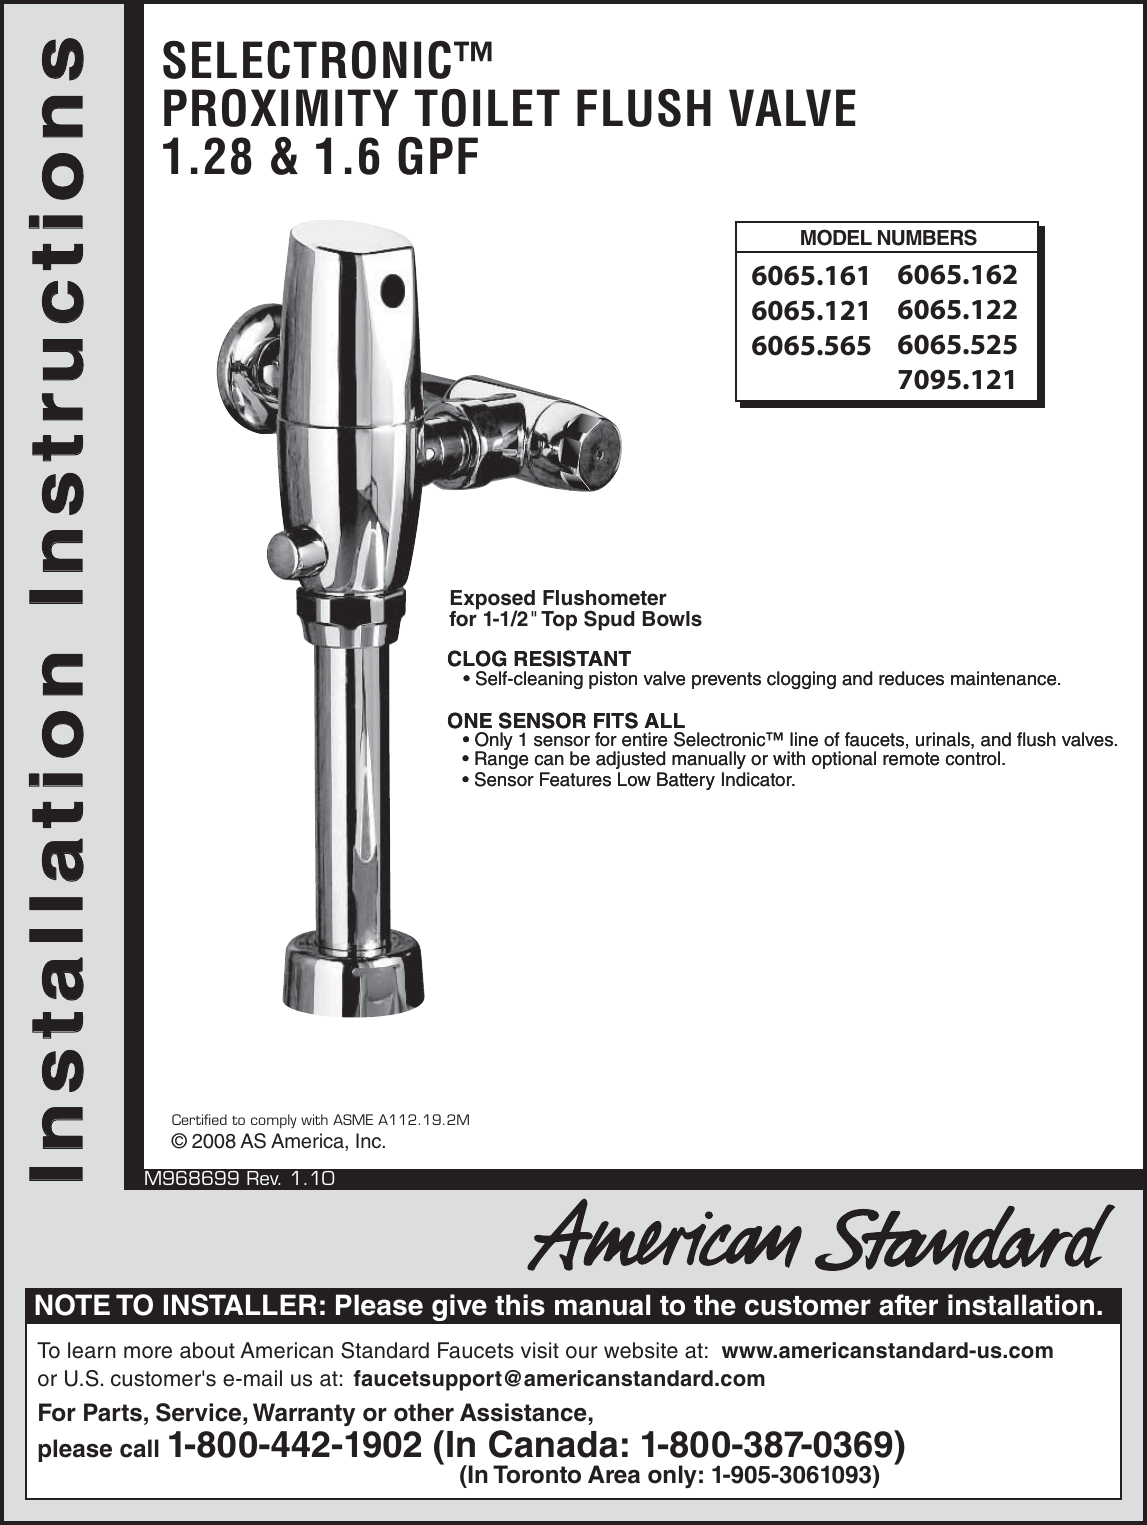 34 American Standard Urinal Parts Diagram